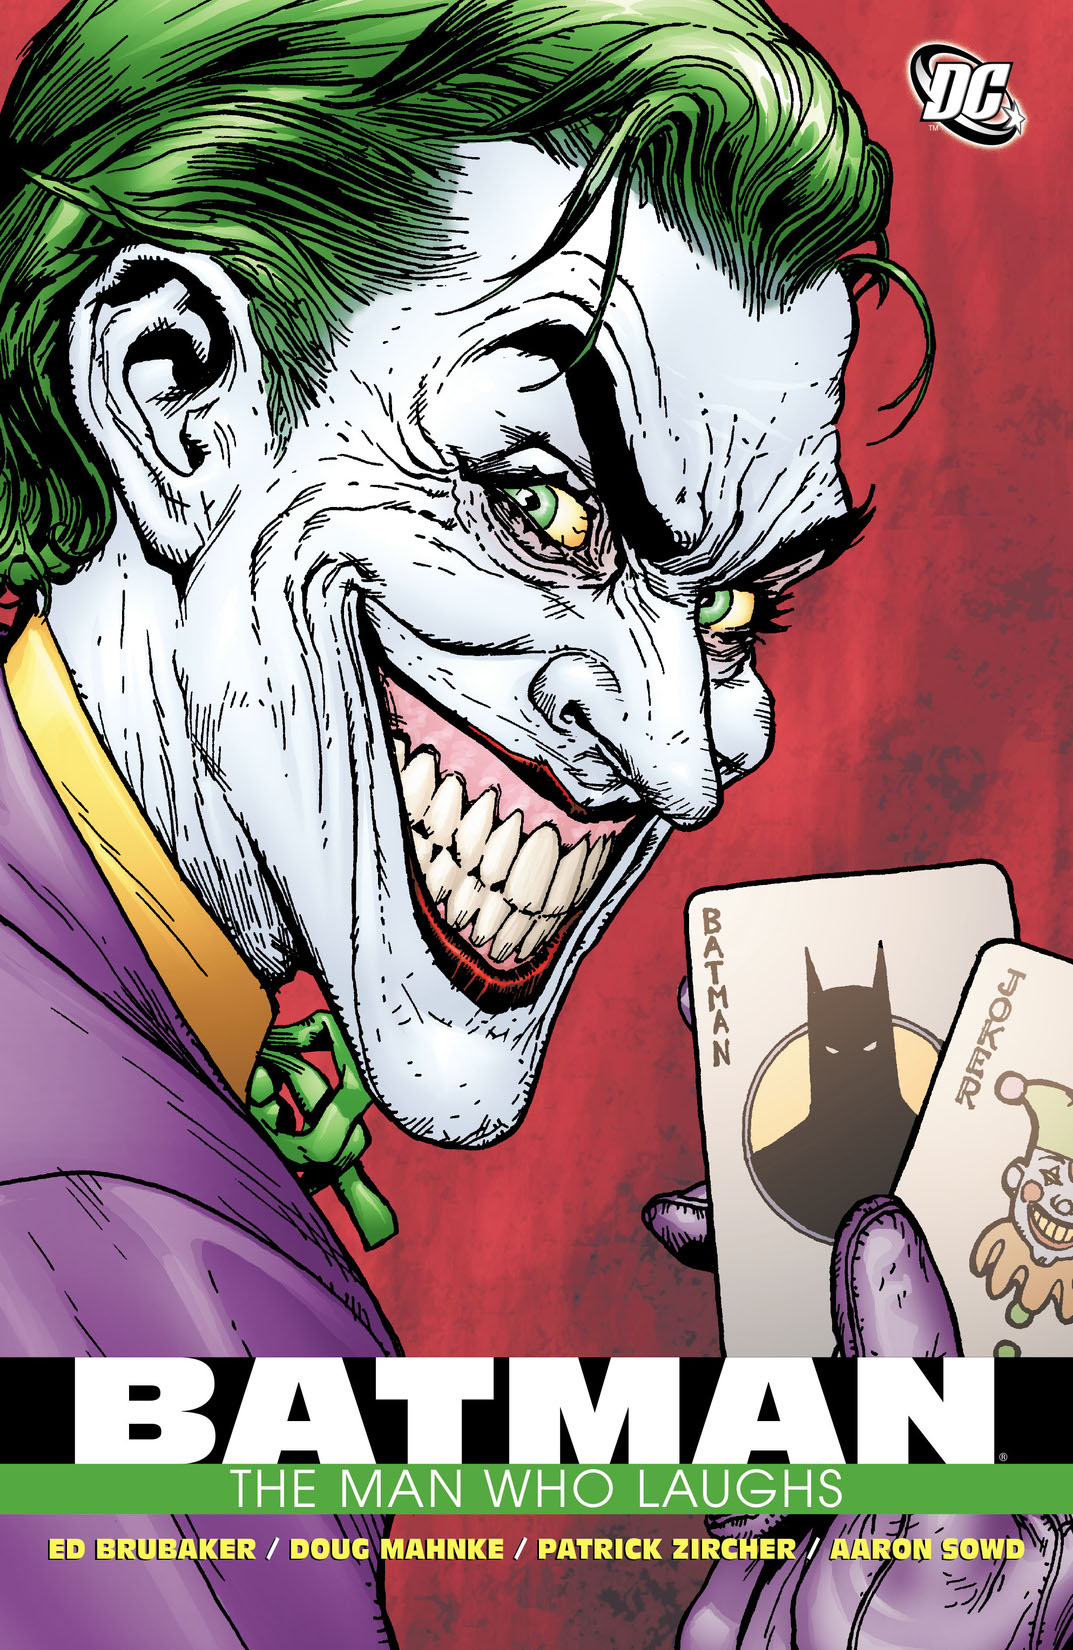 Batman: The Man Who Laughs preview images